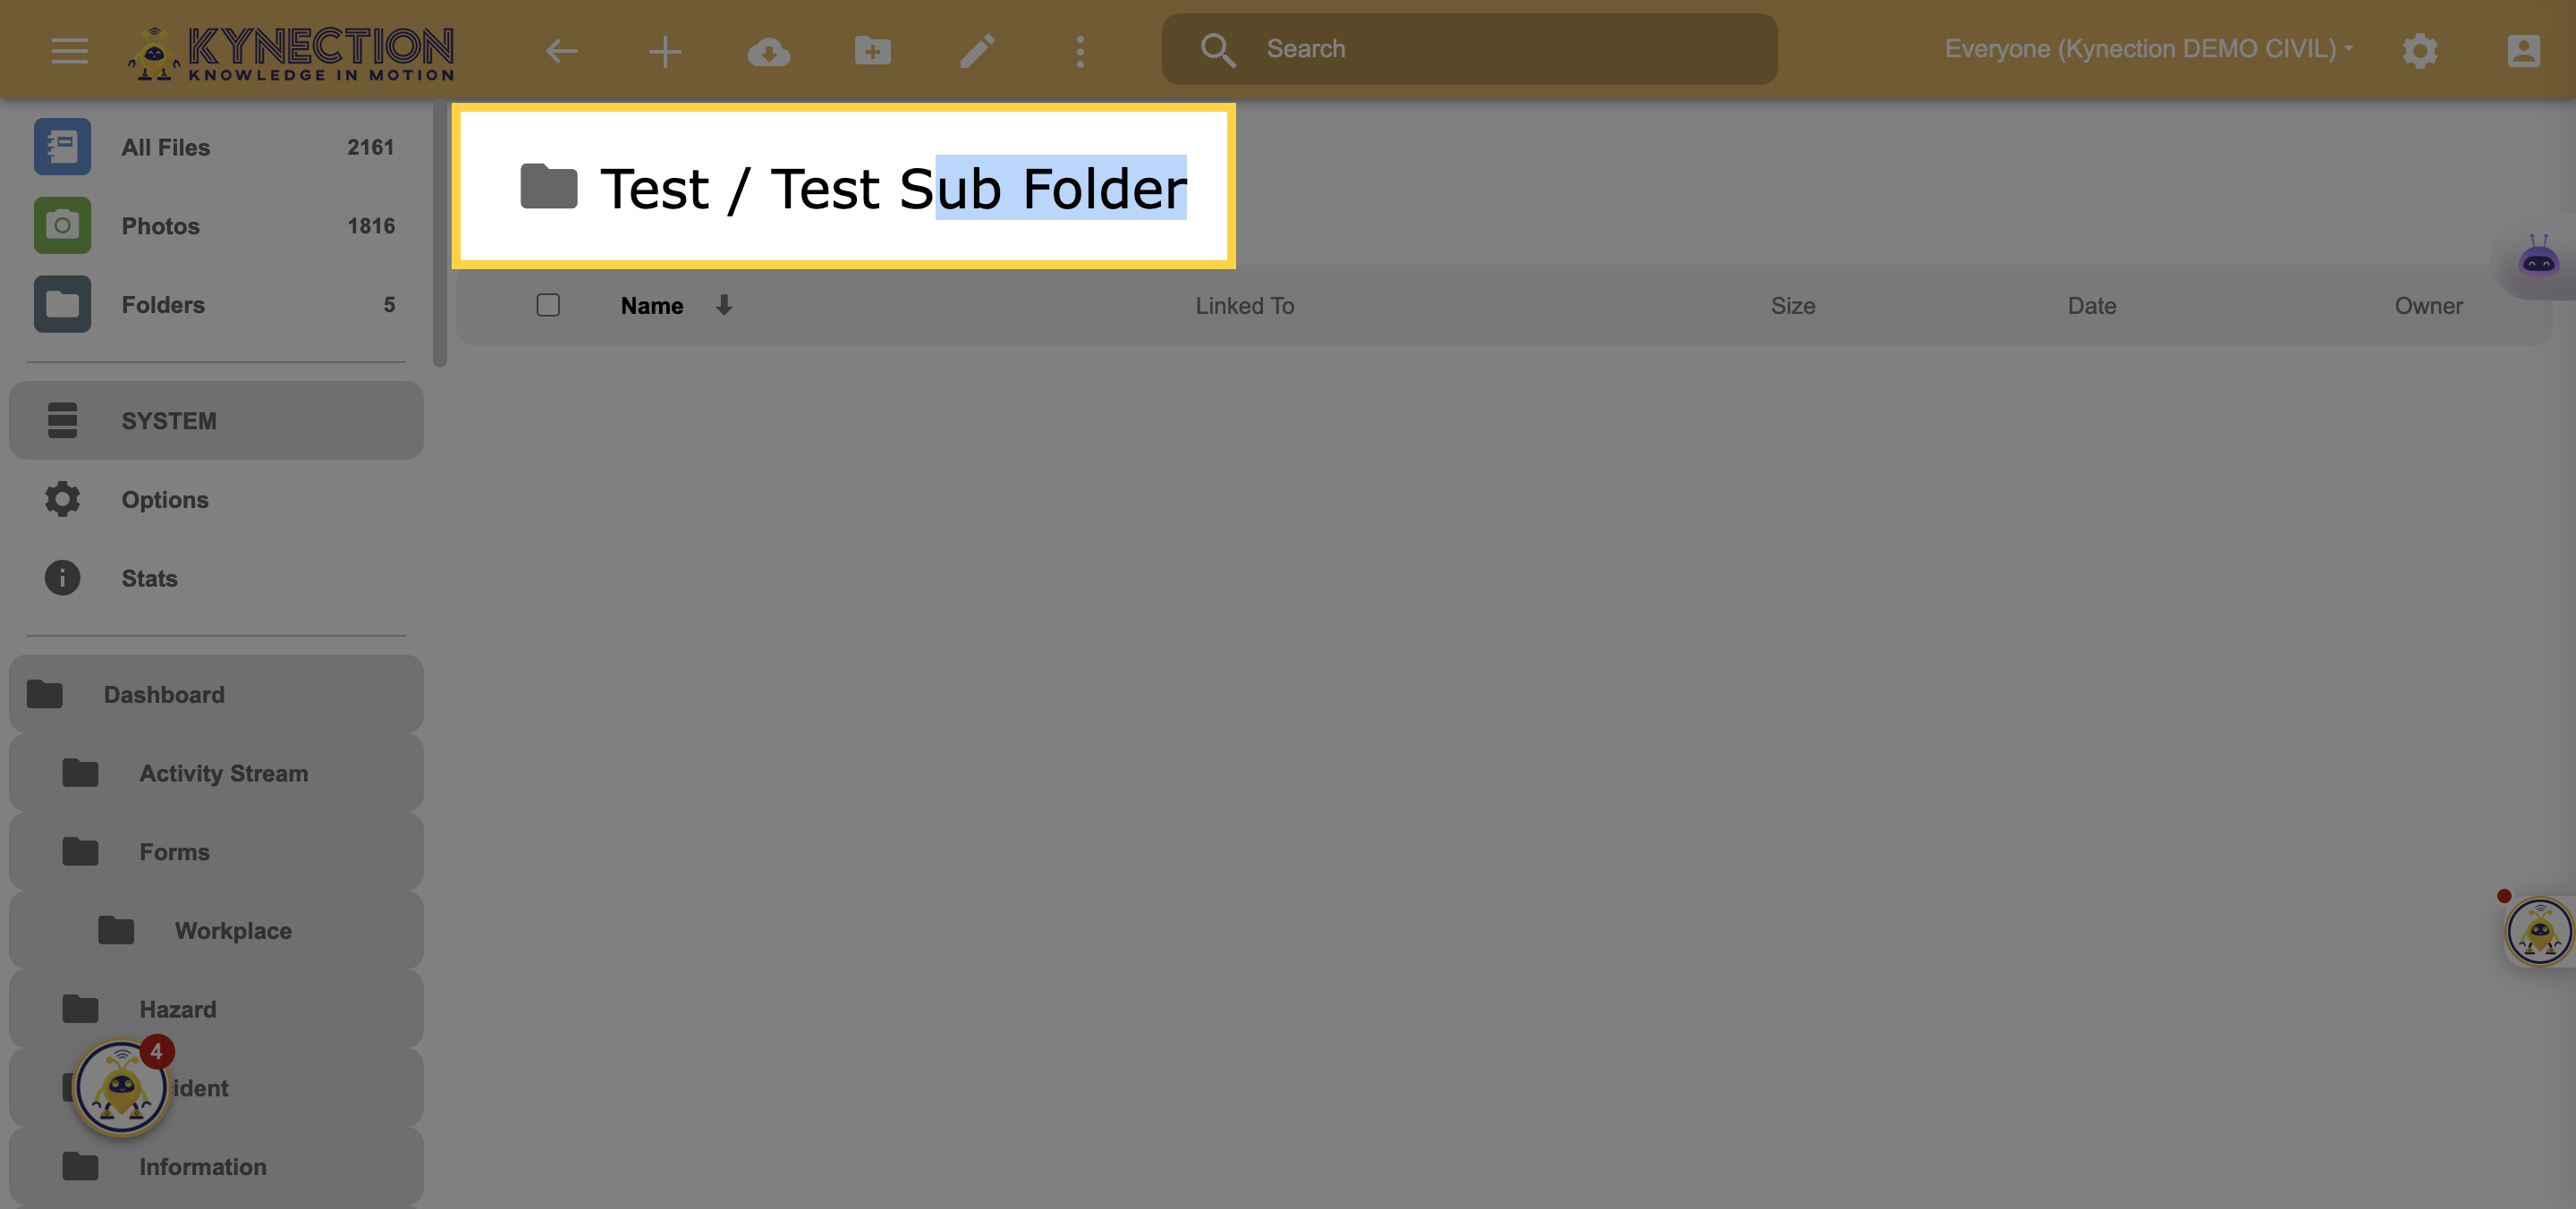 Click 'Test / Test Sub Folder'